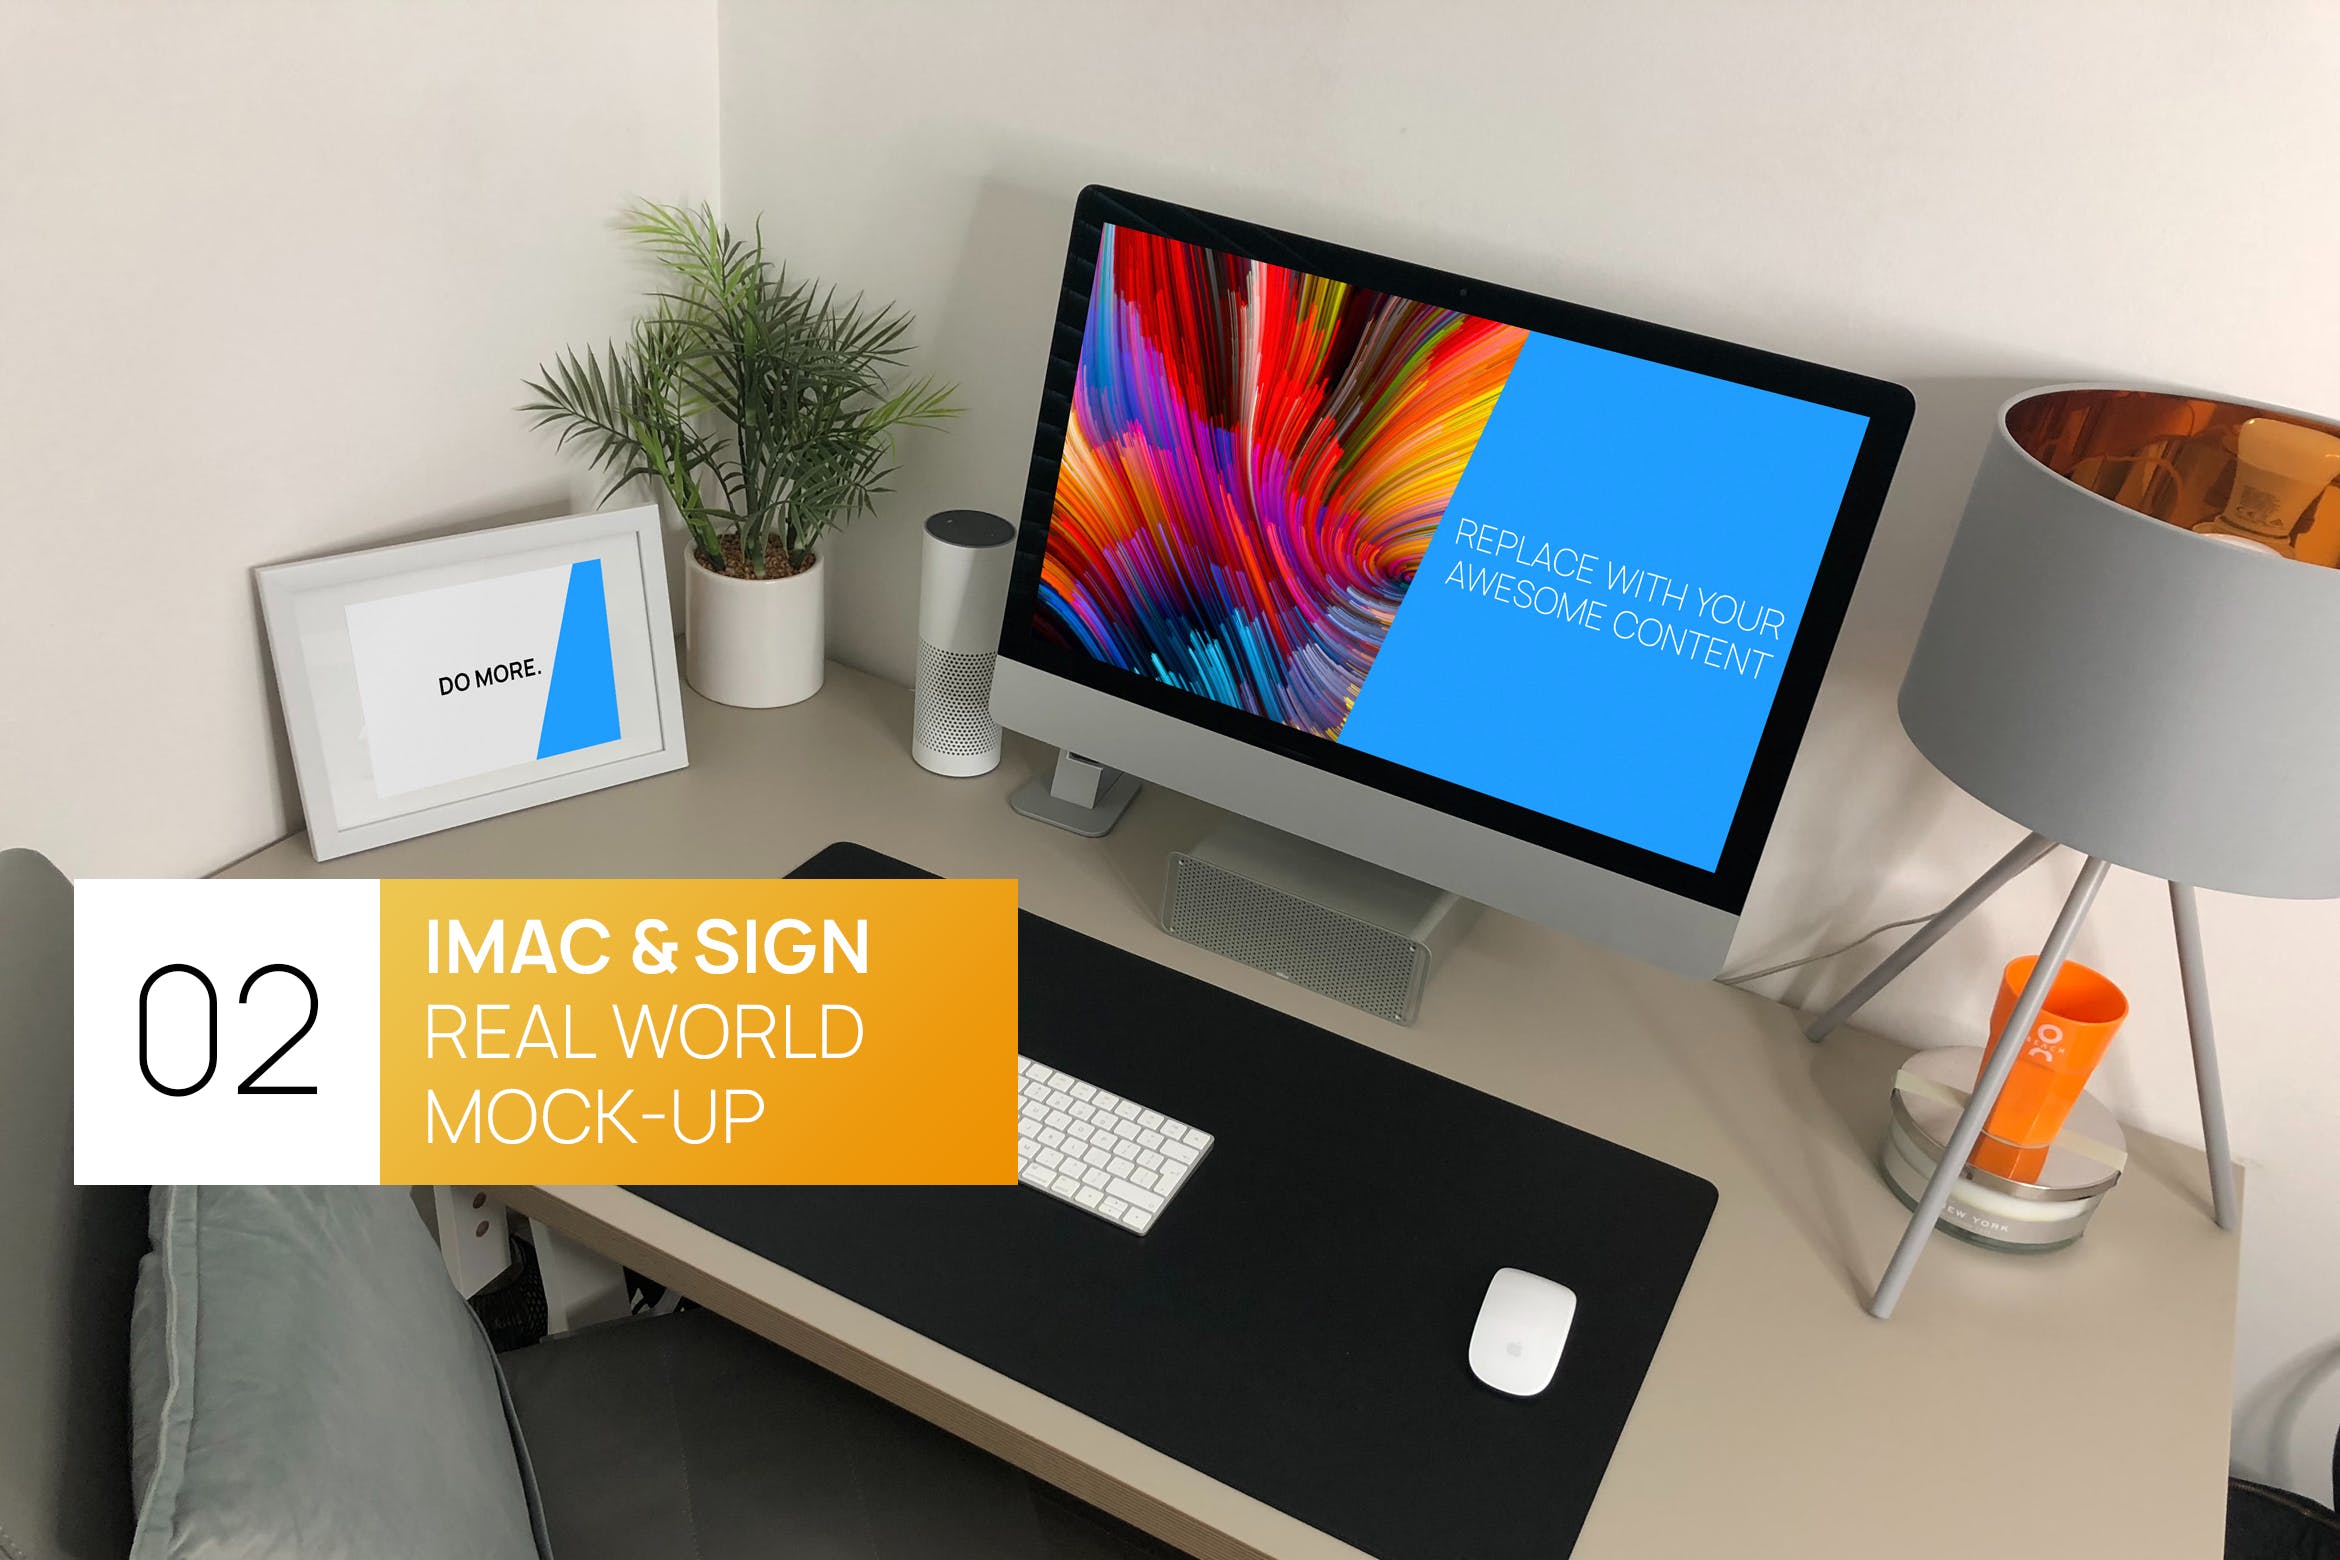 宜家家居风格办公桌场景27寸iMac电脑非凡图库精选样机 iMac 27 with Sign Real World Photo Mock-up插图